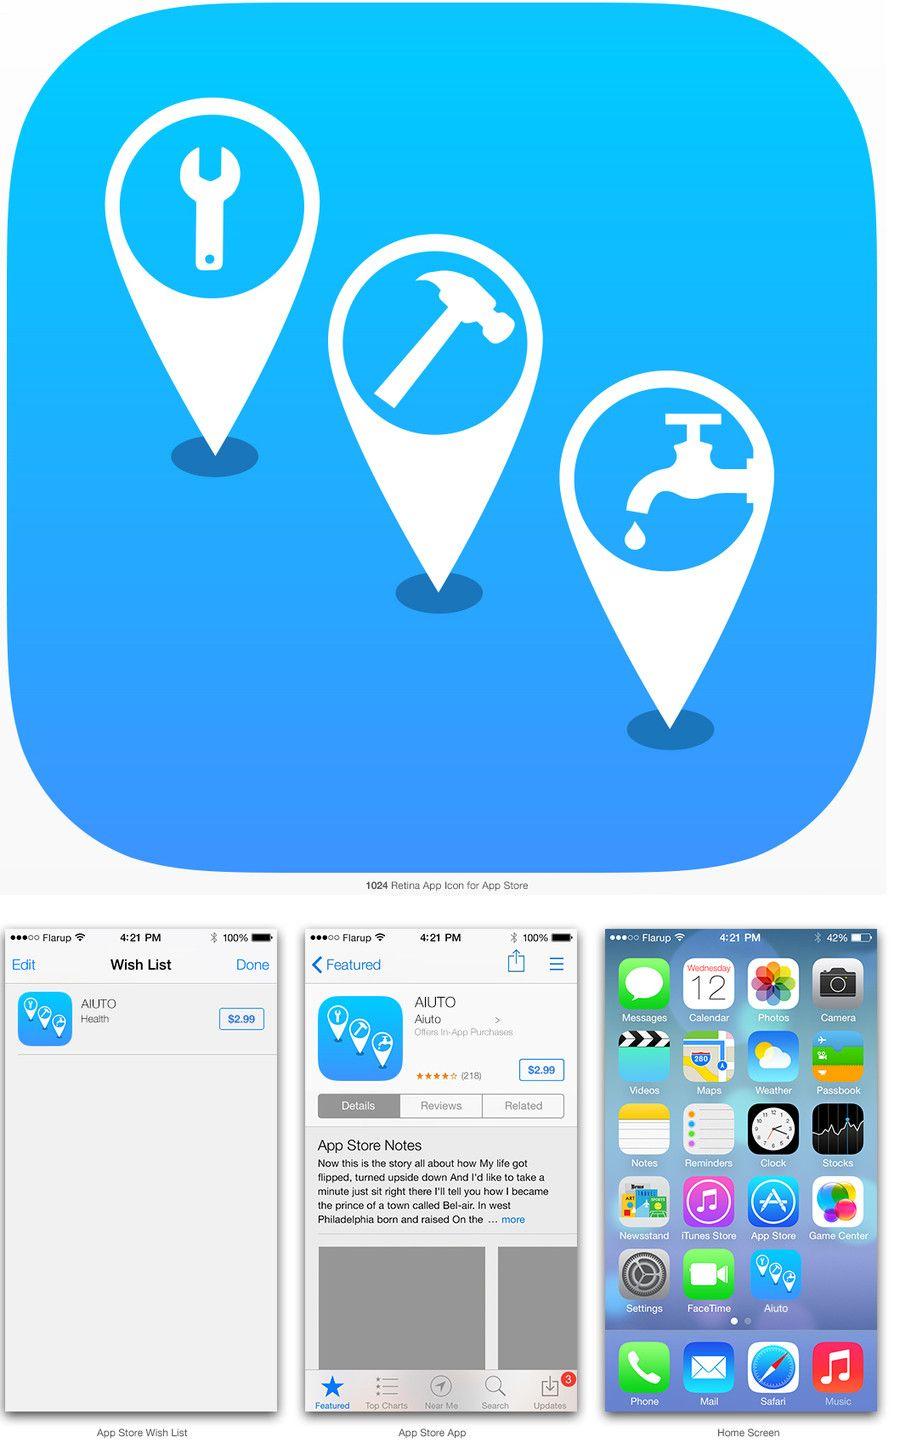 I OS7 App Store Logo - Entry #20 by rubenreyes20 for OS 7 App icon & splash screen | Freelancer